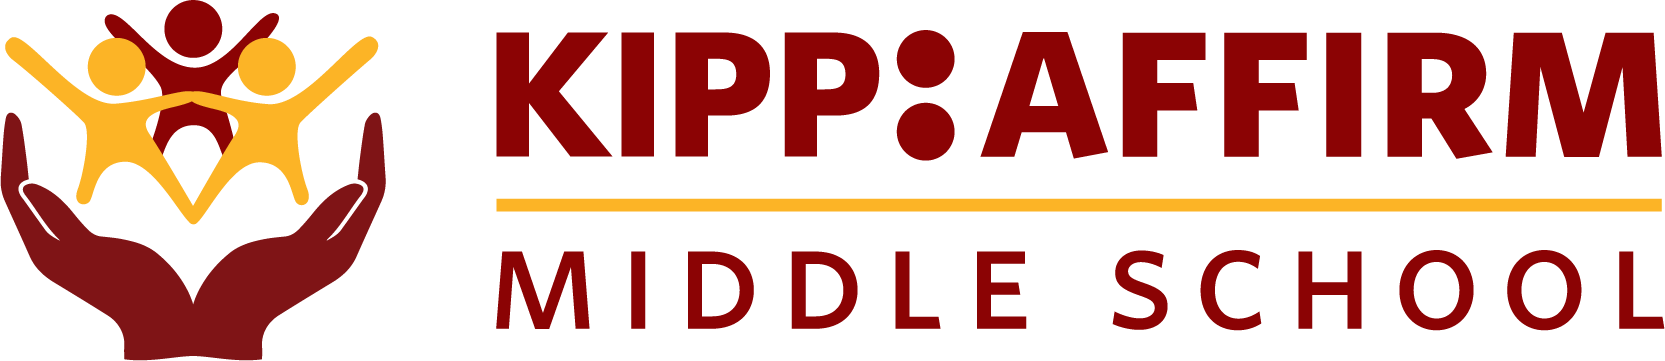 KIPP Affirm Middle School